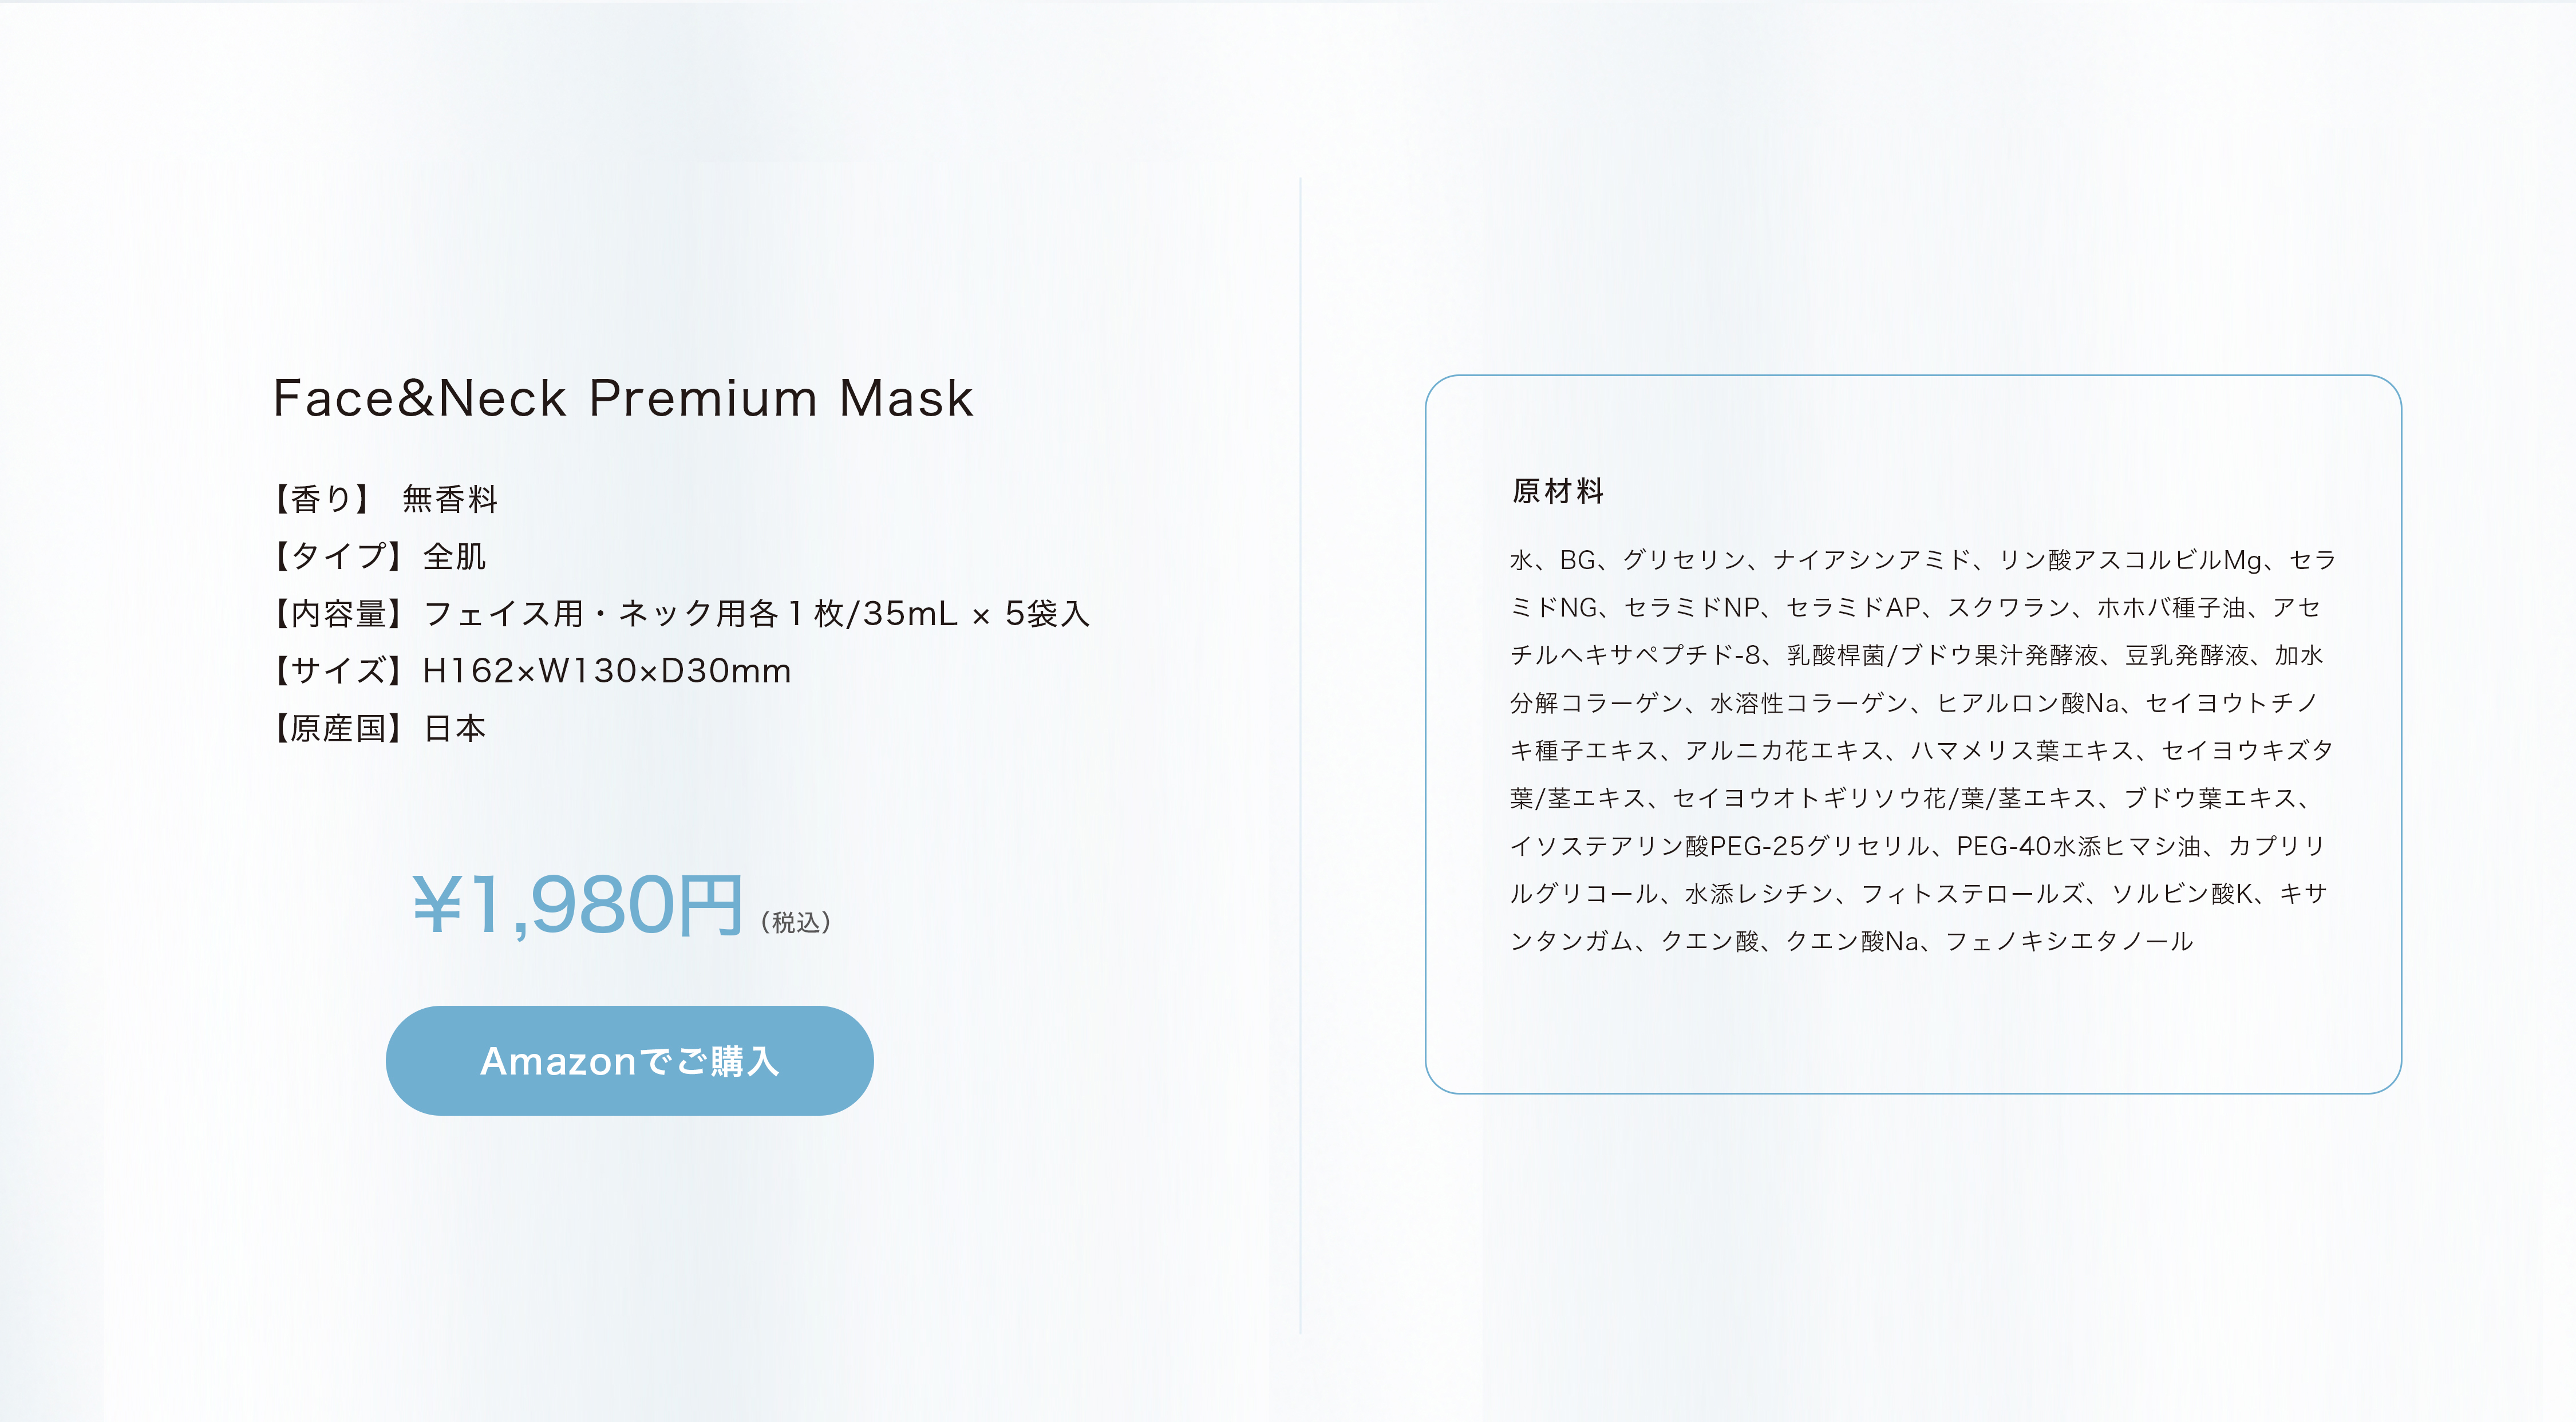 Face & Neck Premium Mask 商品の概要と成分表示。